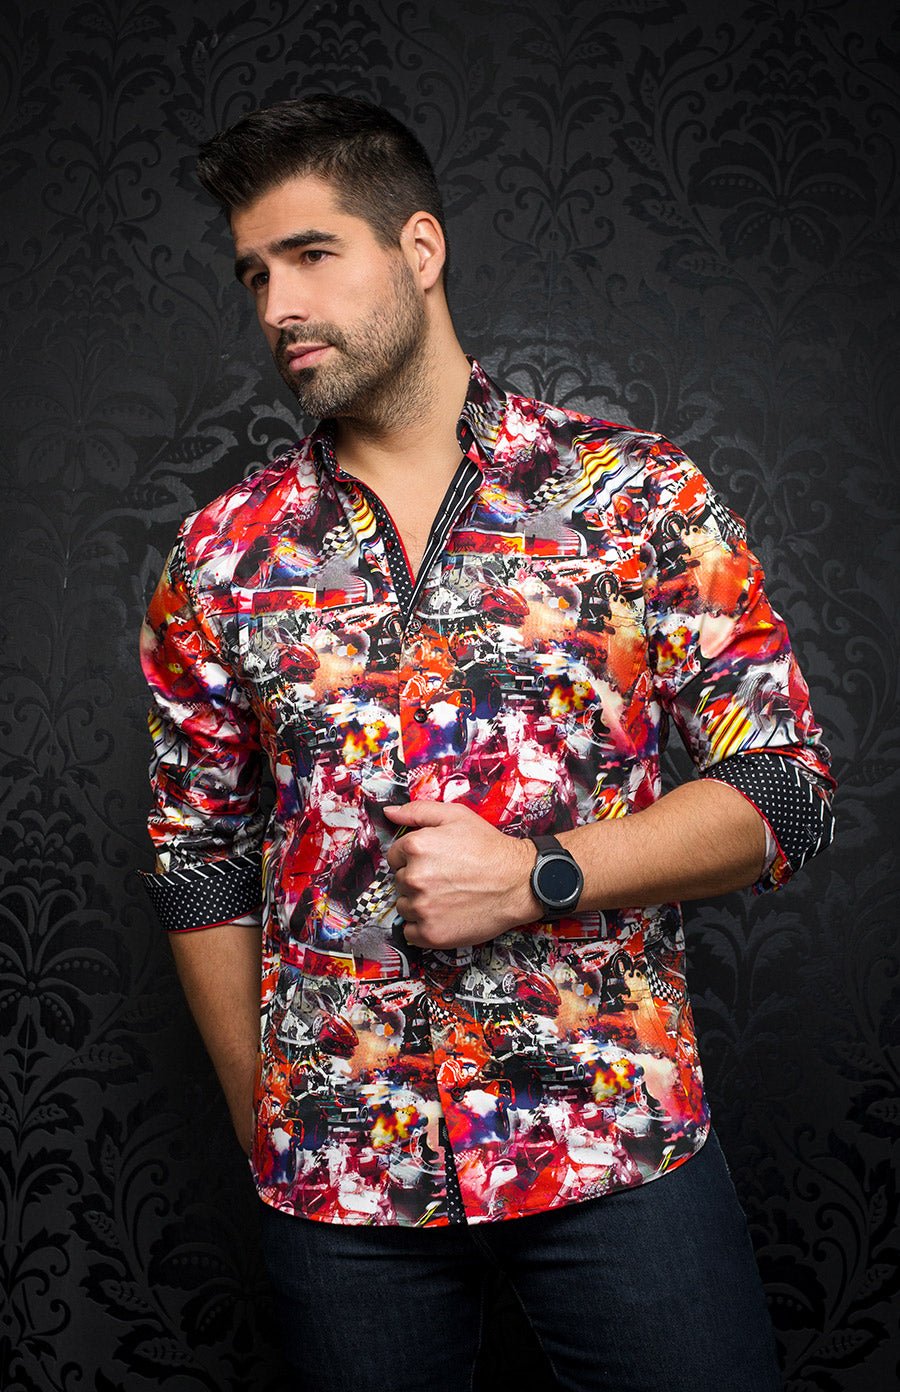 Elie Balleh Black Floral Prints Boys Short Sleeve Shirt / Button Down